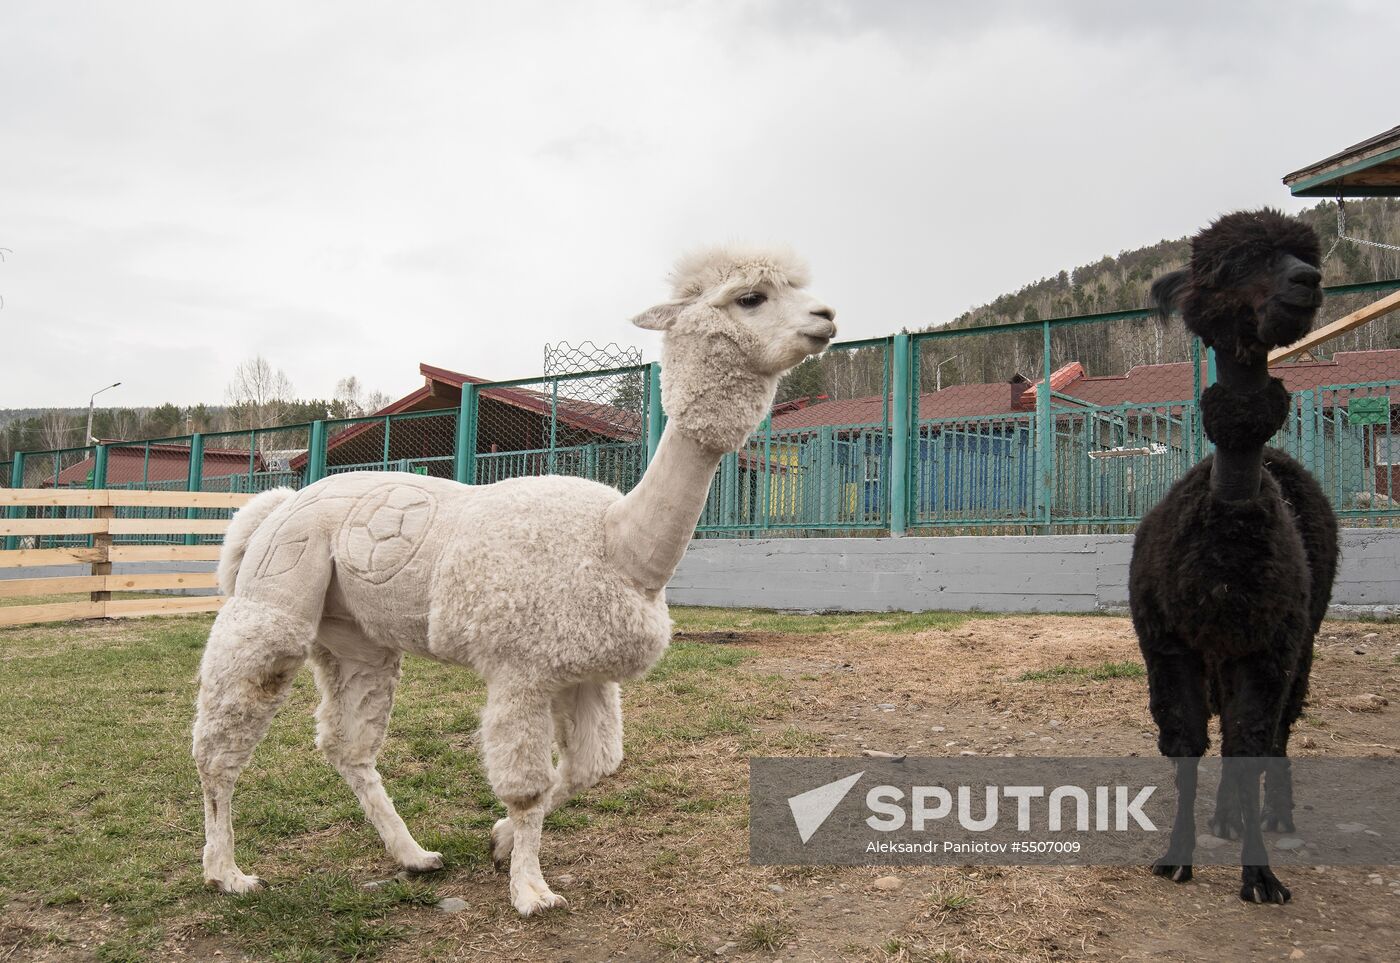 Design shaved into alpaca's fur for 2018 Word Cup at Krasnoyarsk zoo